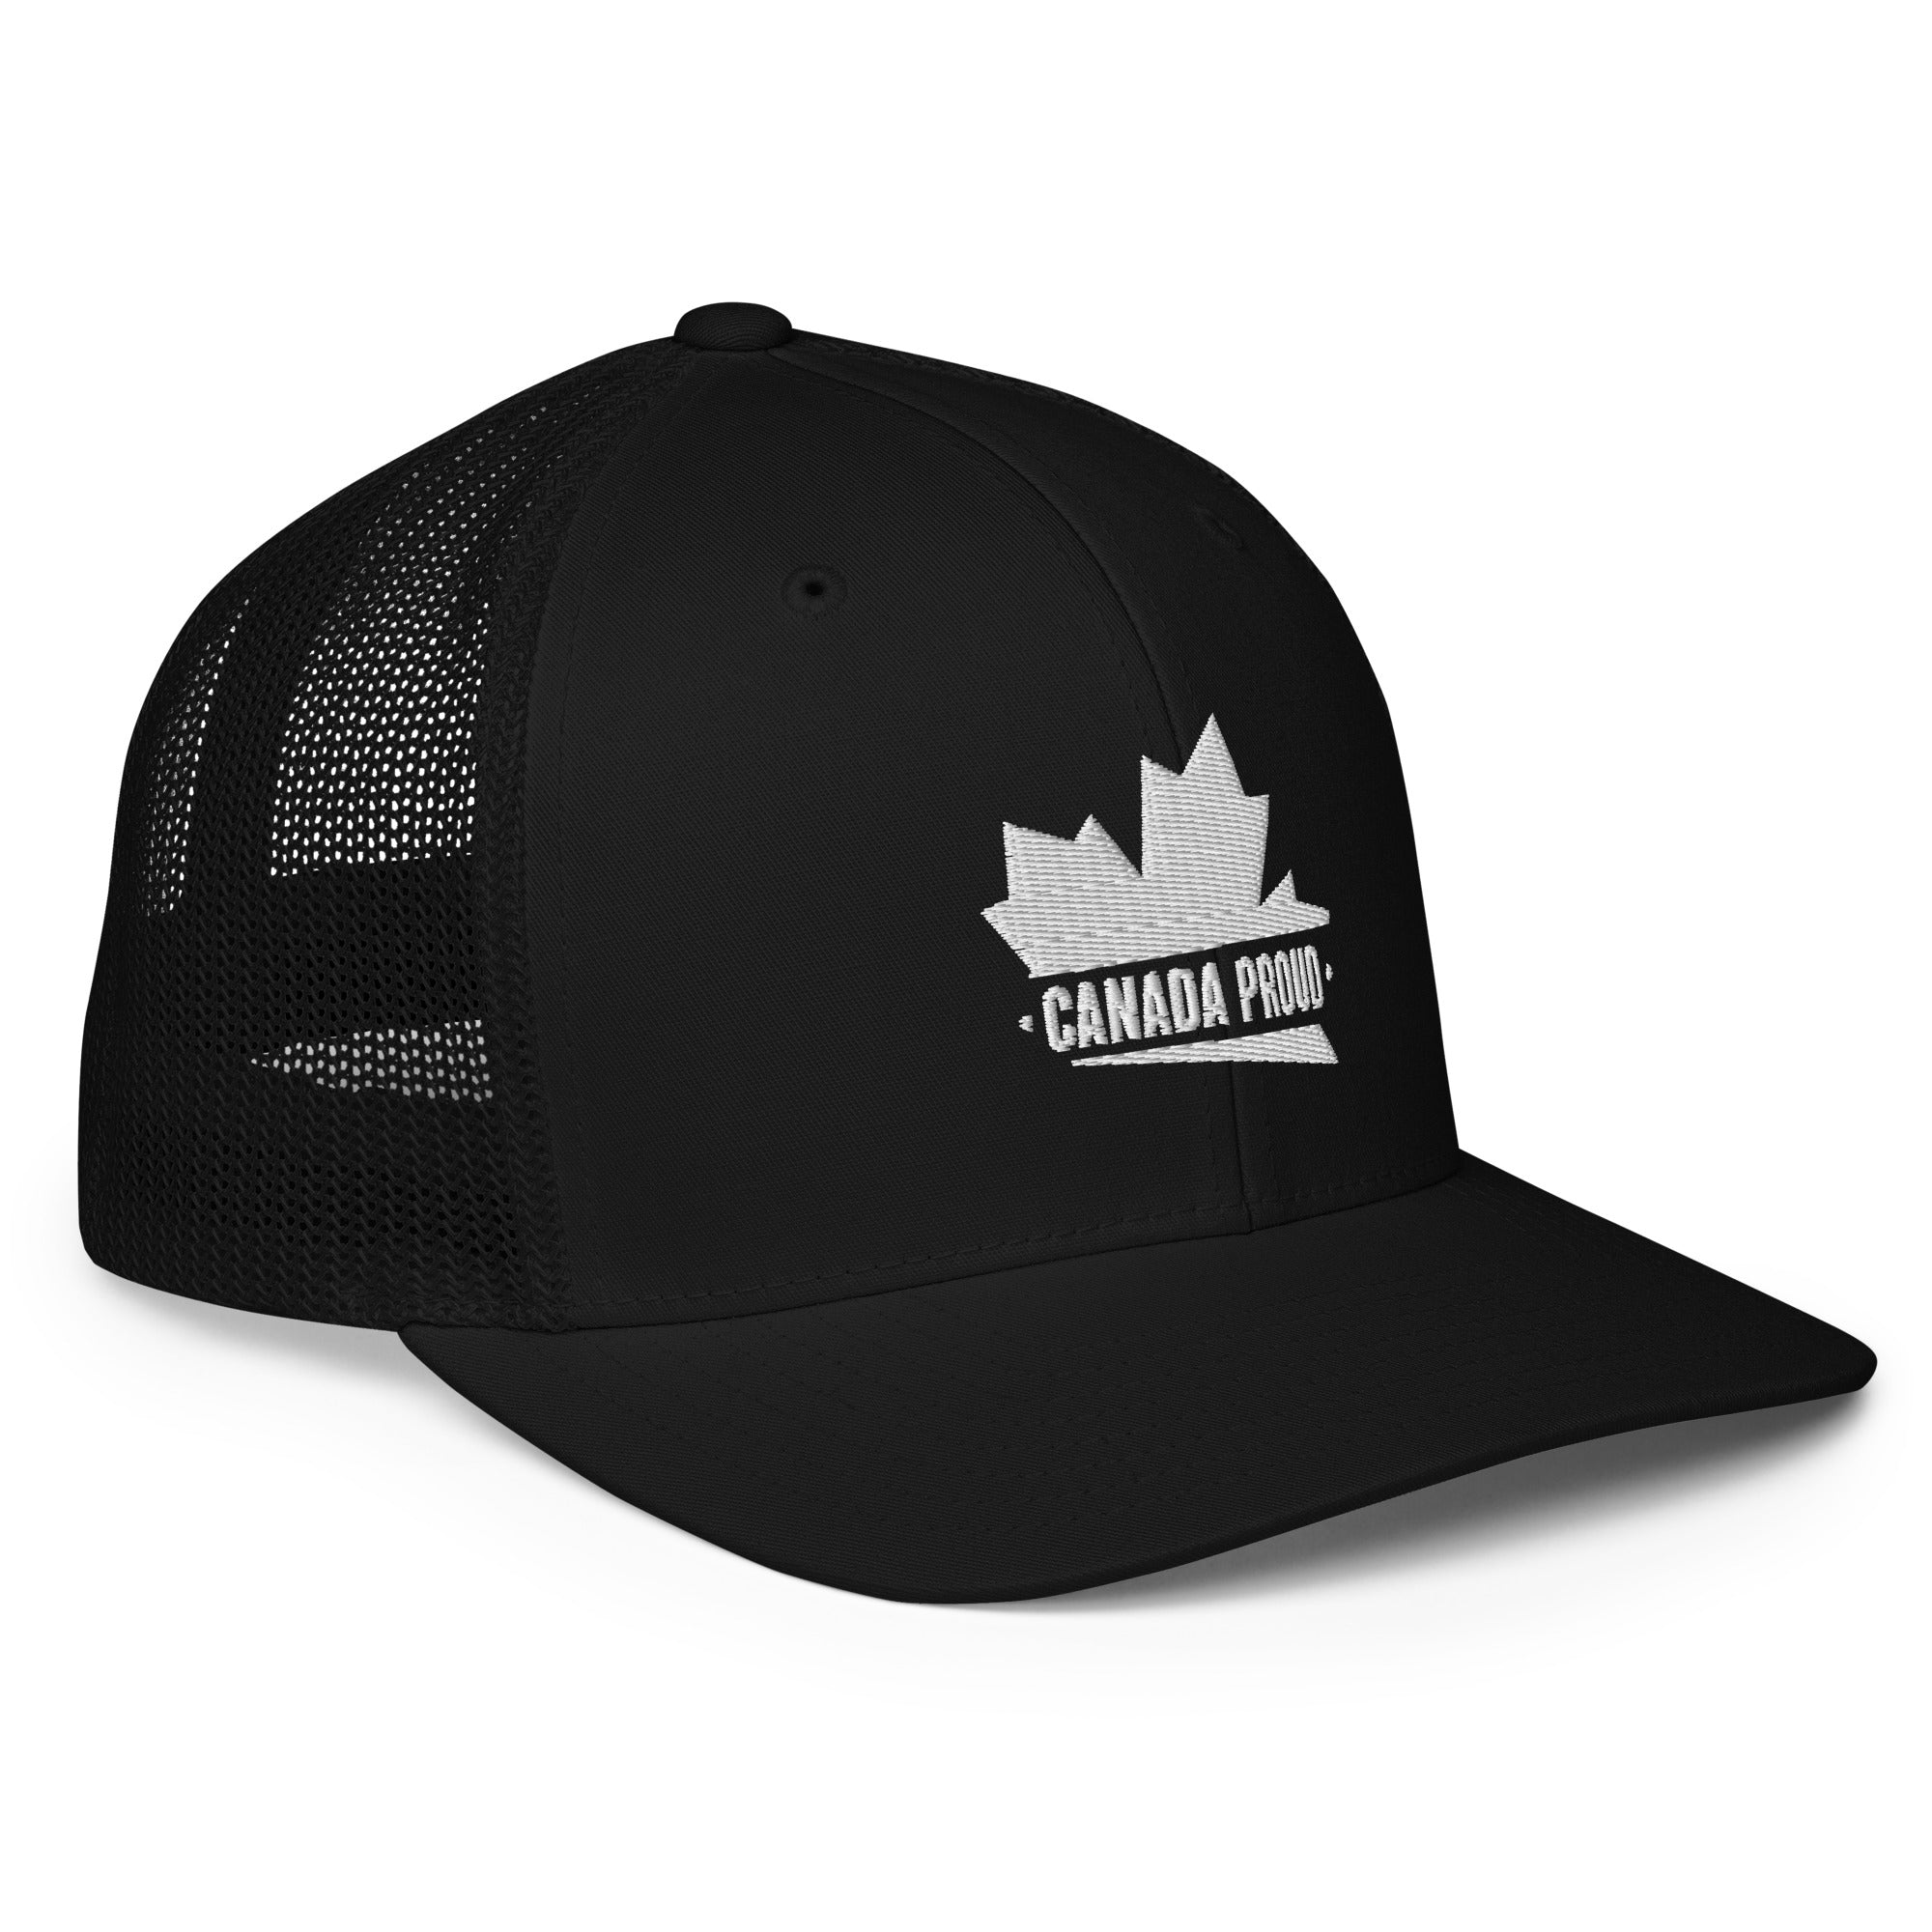 Canada Proud Mesh Back Trucker Cap